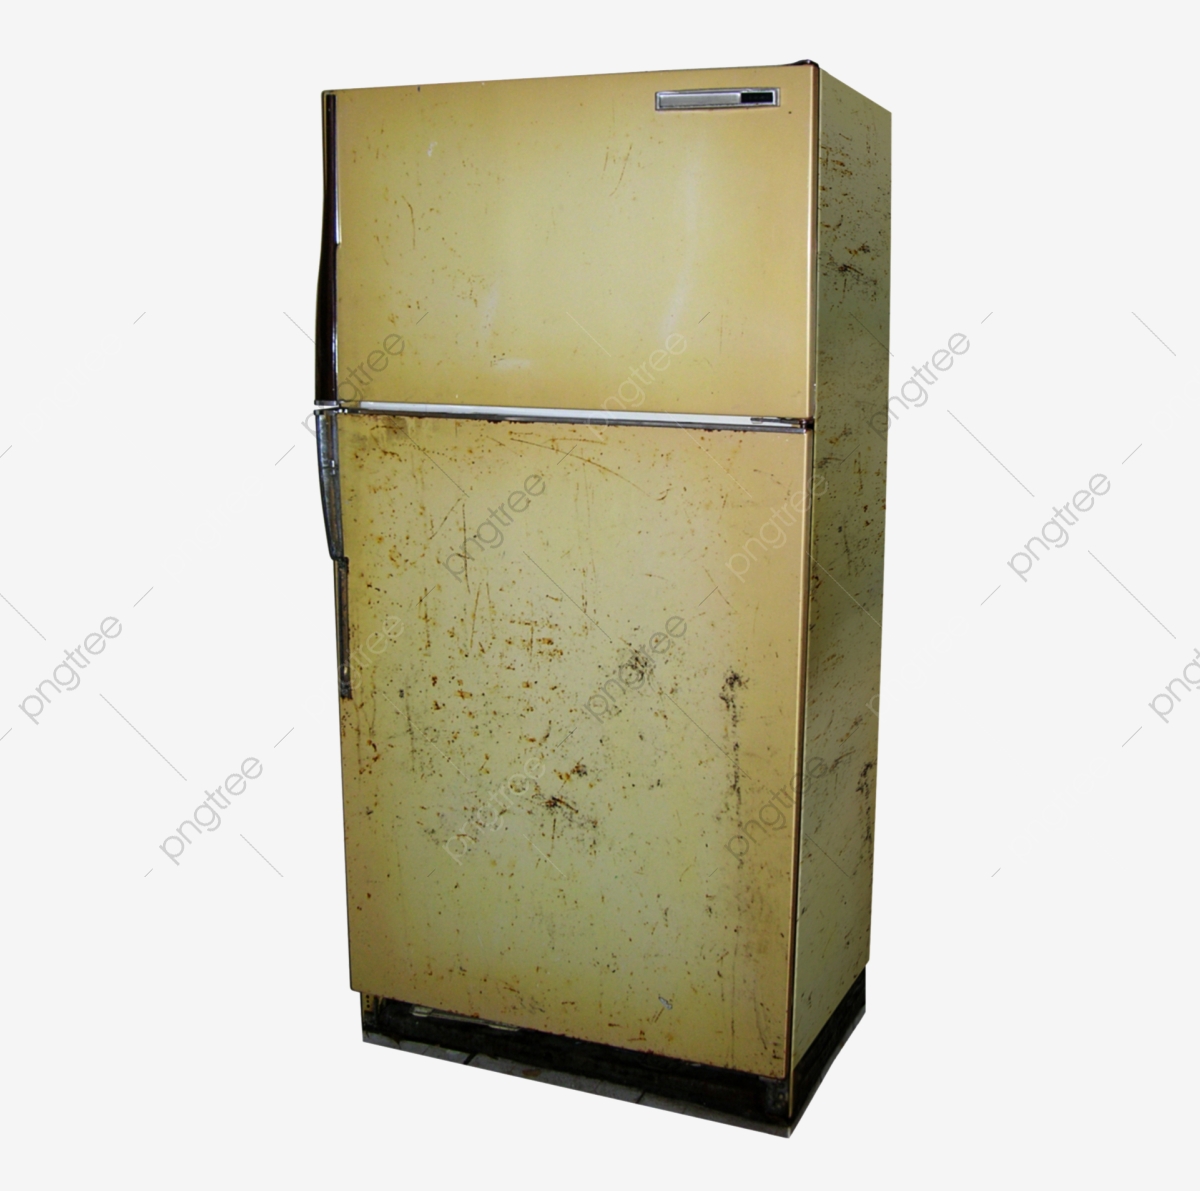 Refrigerator clipart old refrigerator. Png transparent 